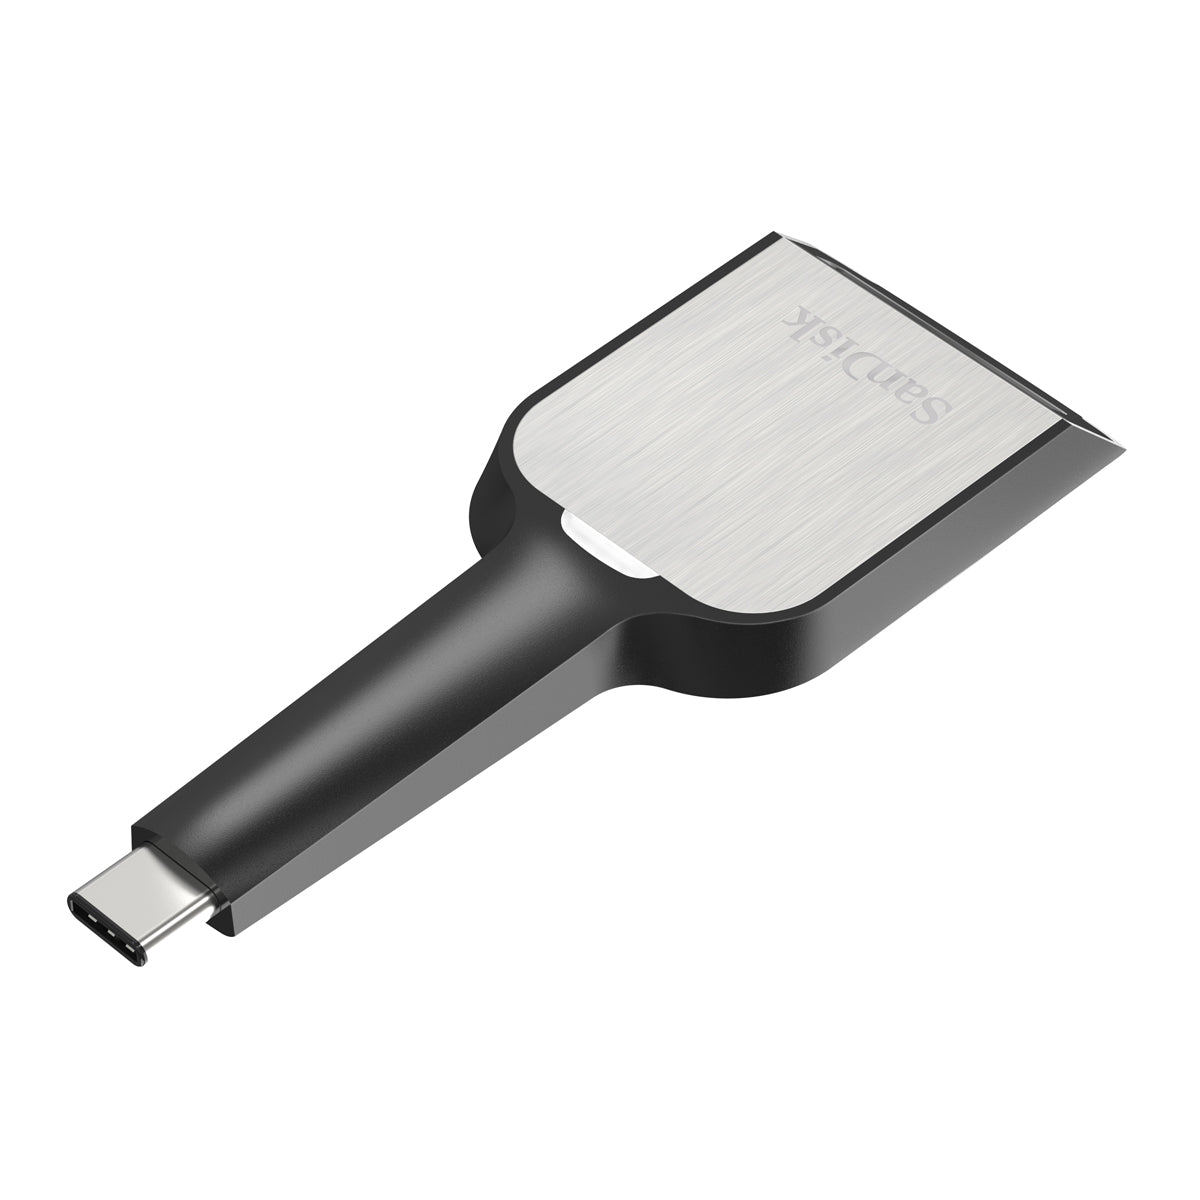 SanDisk Extreme PRO USB 3.1 Type-C SD Card Reader